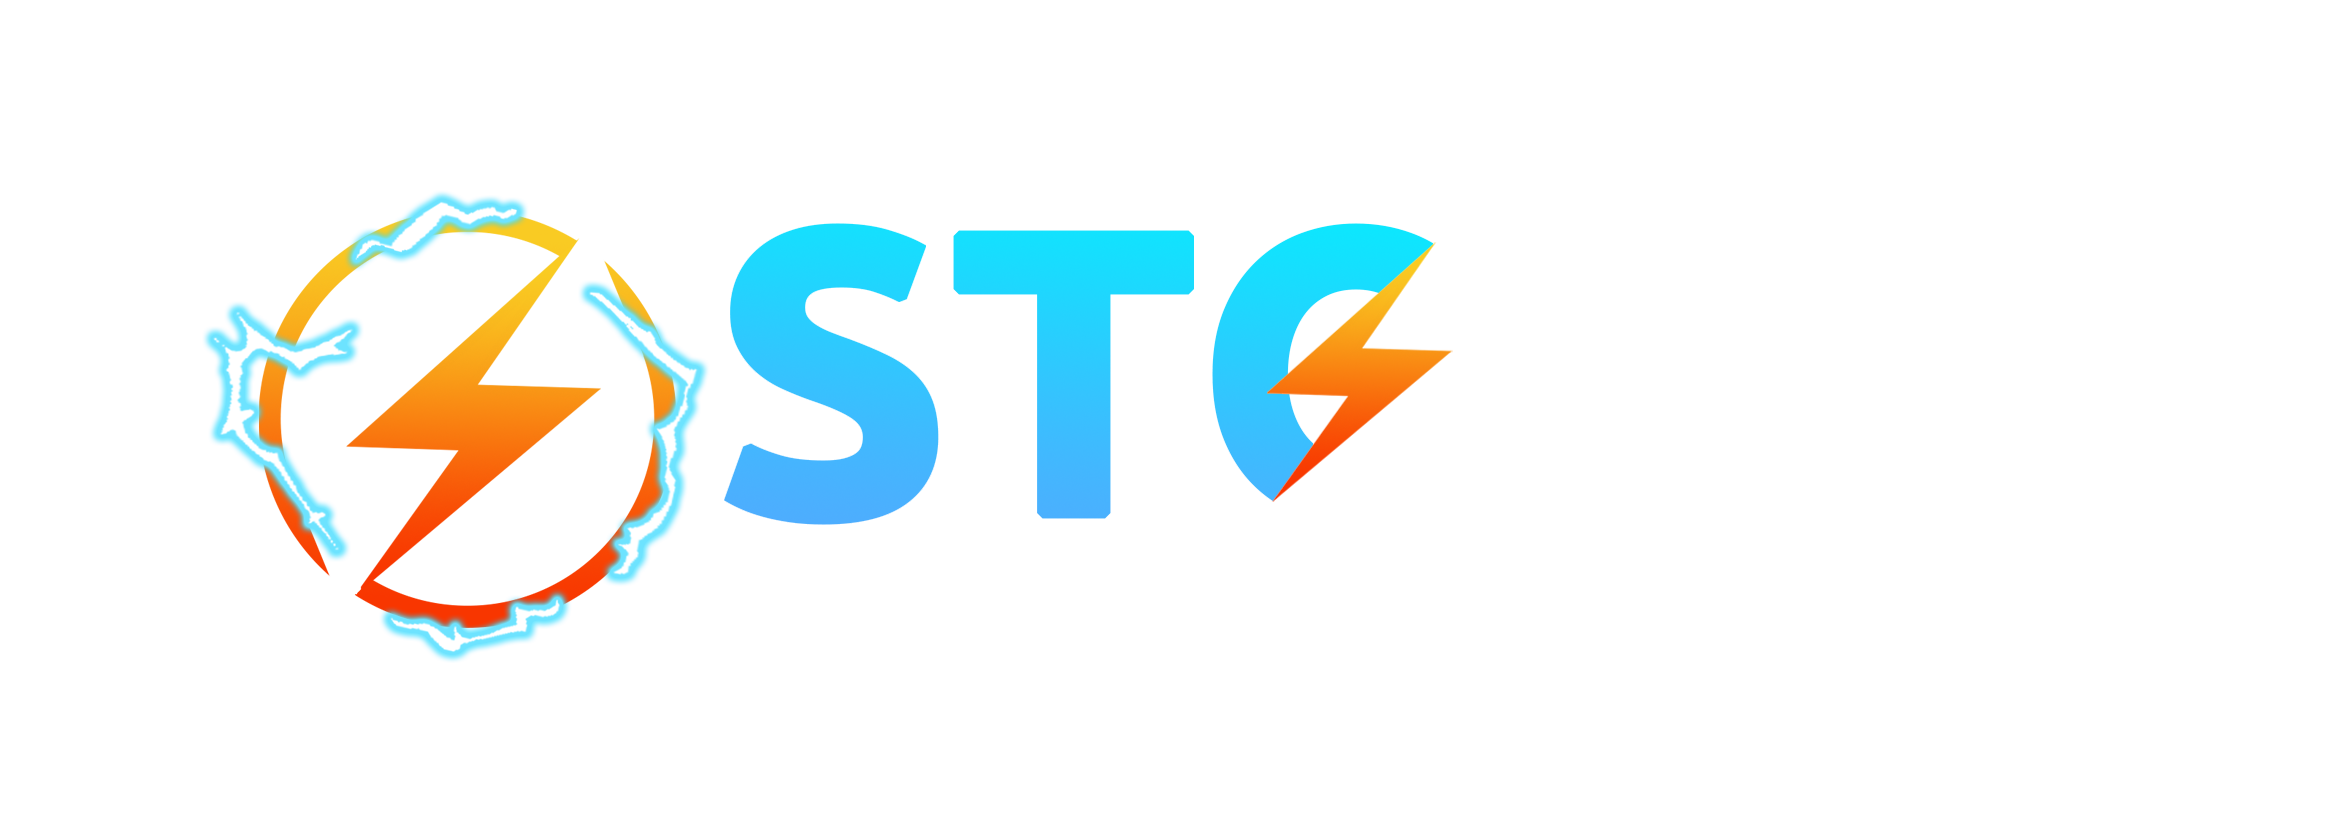 Storm Server Hosting, LLC.